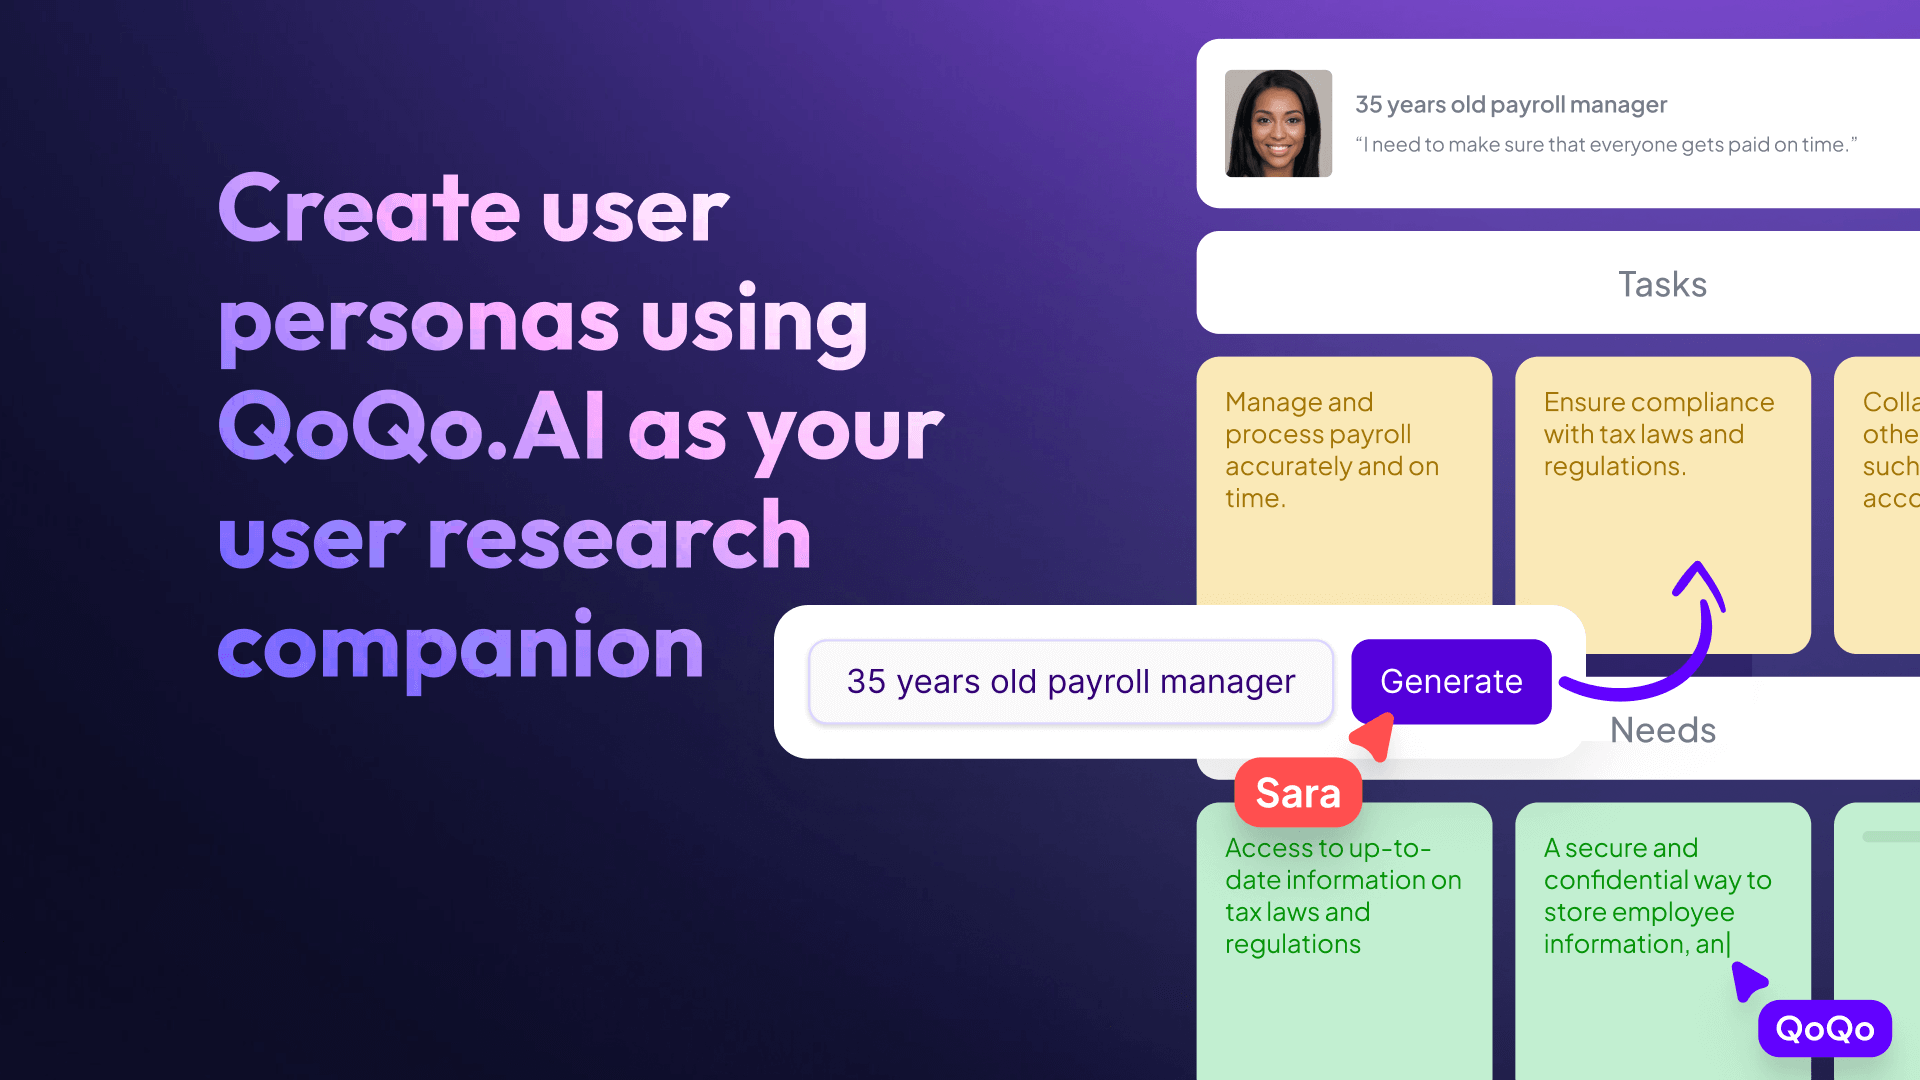 Create user personas using QoQo.AI as your user research companion